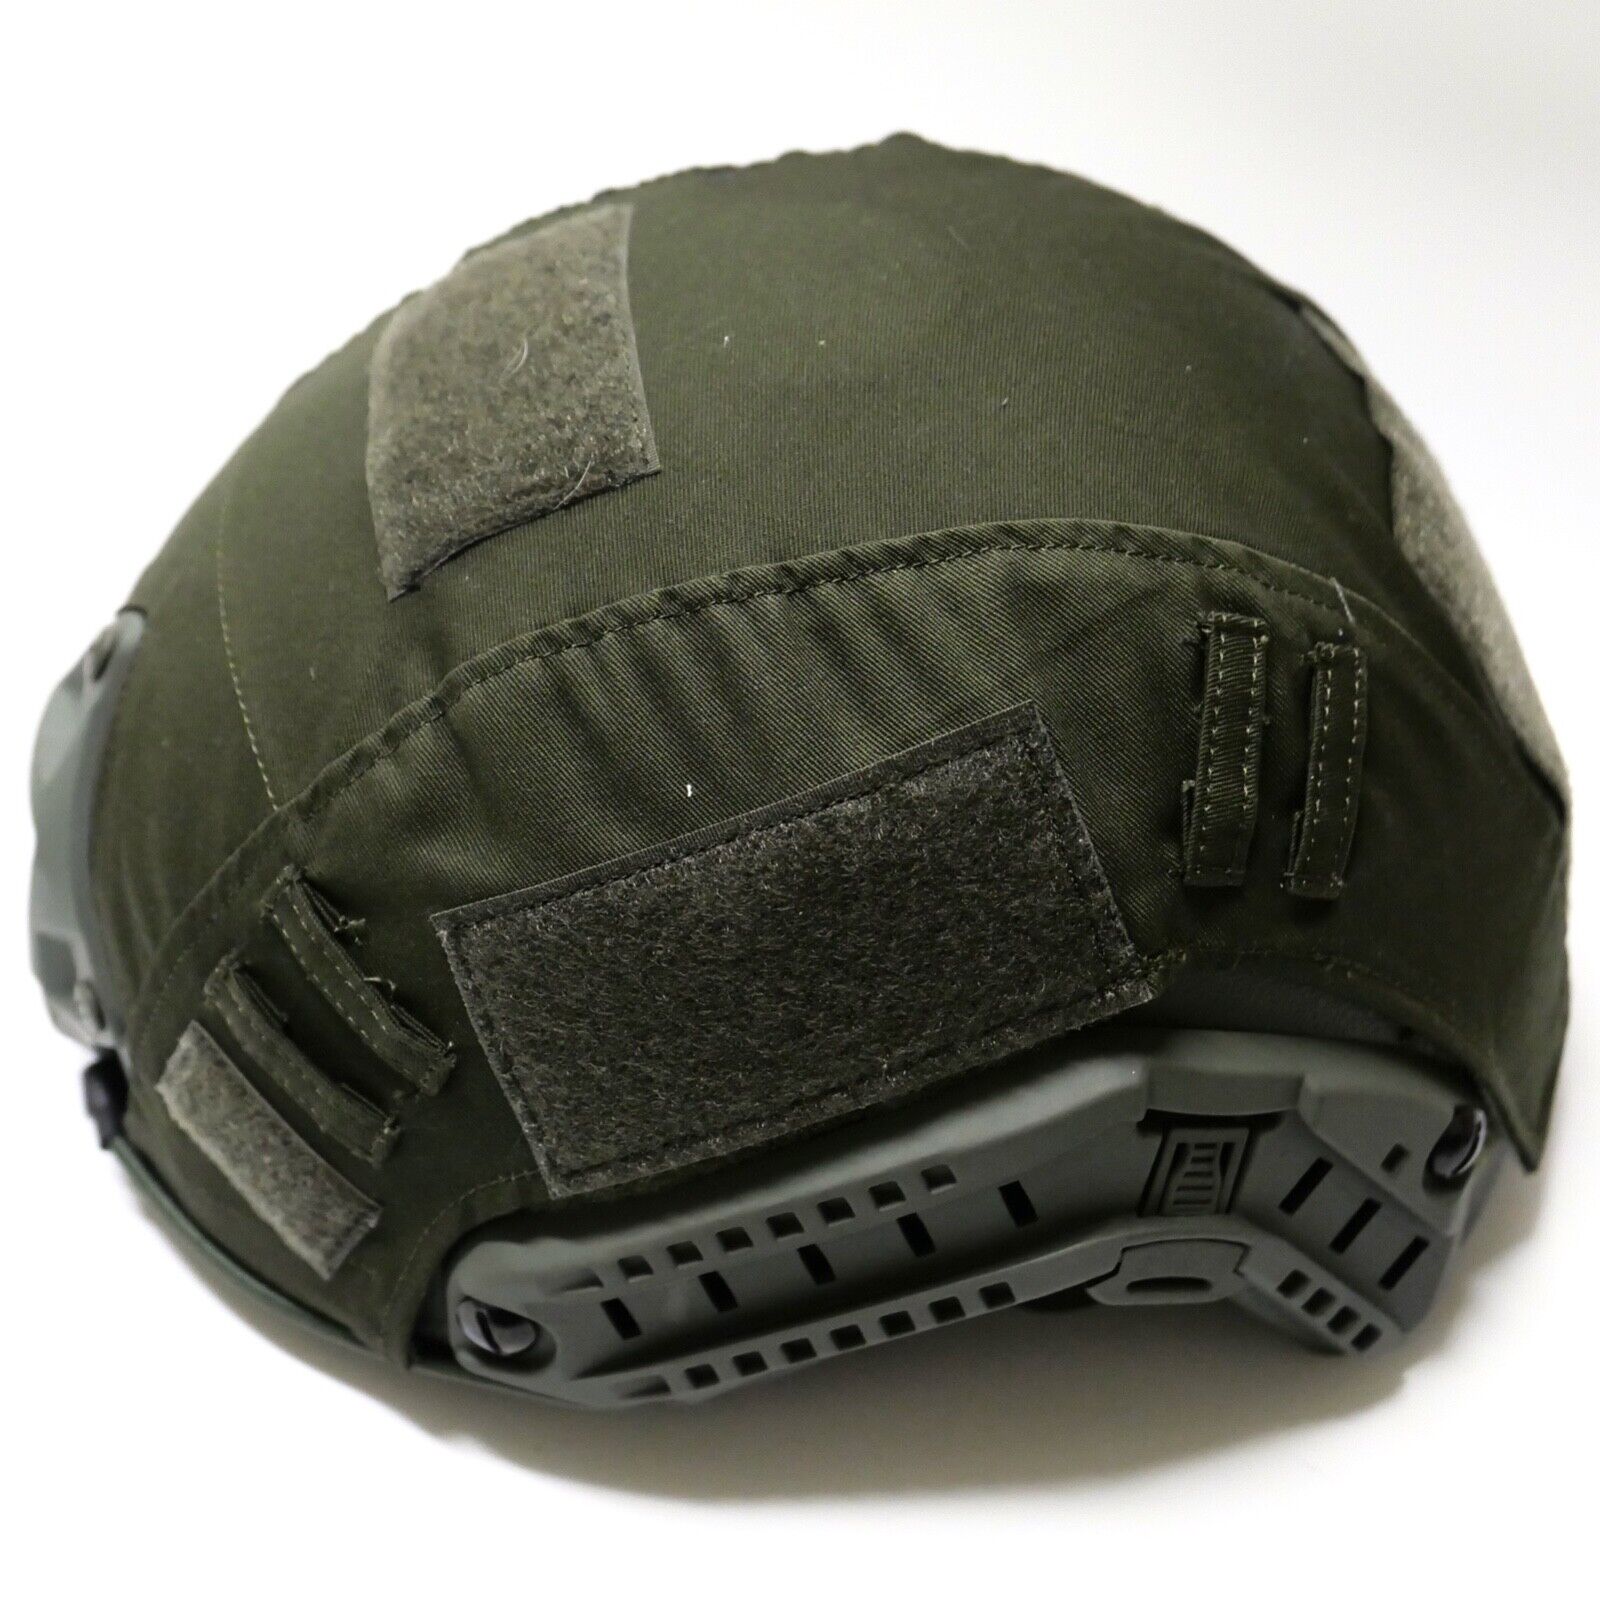 Level IIIA bulletproof ballistic helmet, made with Kevlar - with cover - video